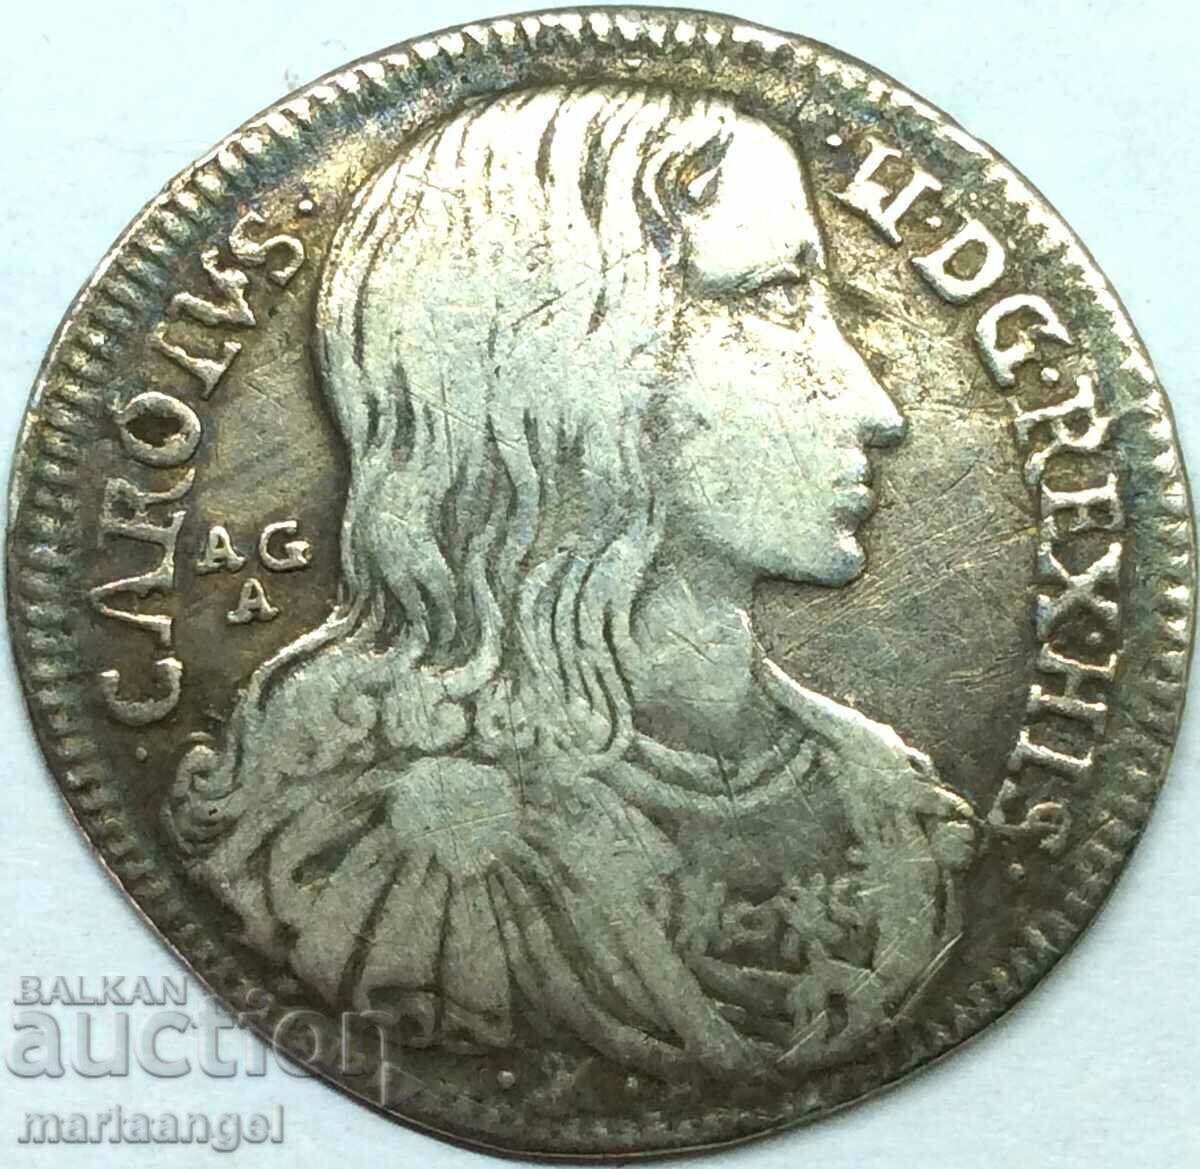 Naples 20 grains Charles II Spanish Italy silver - rare